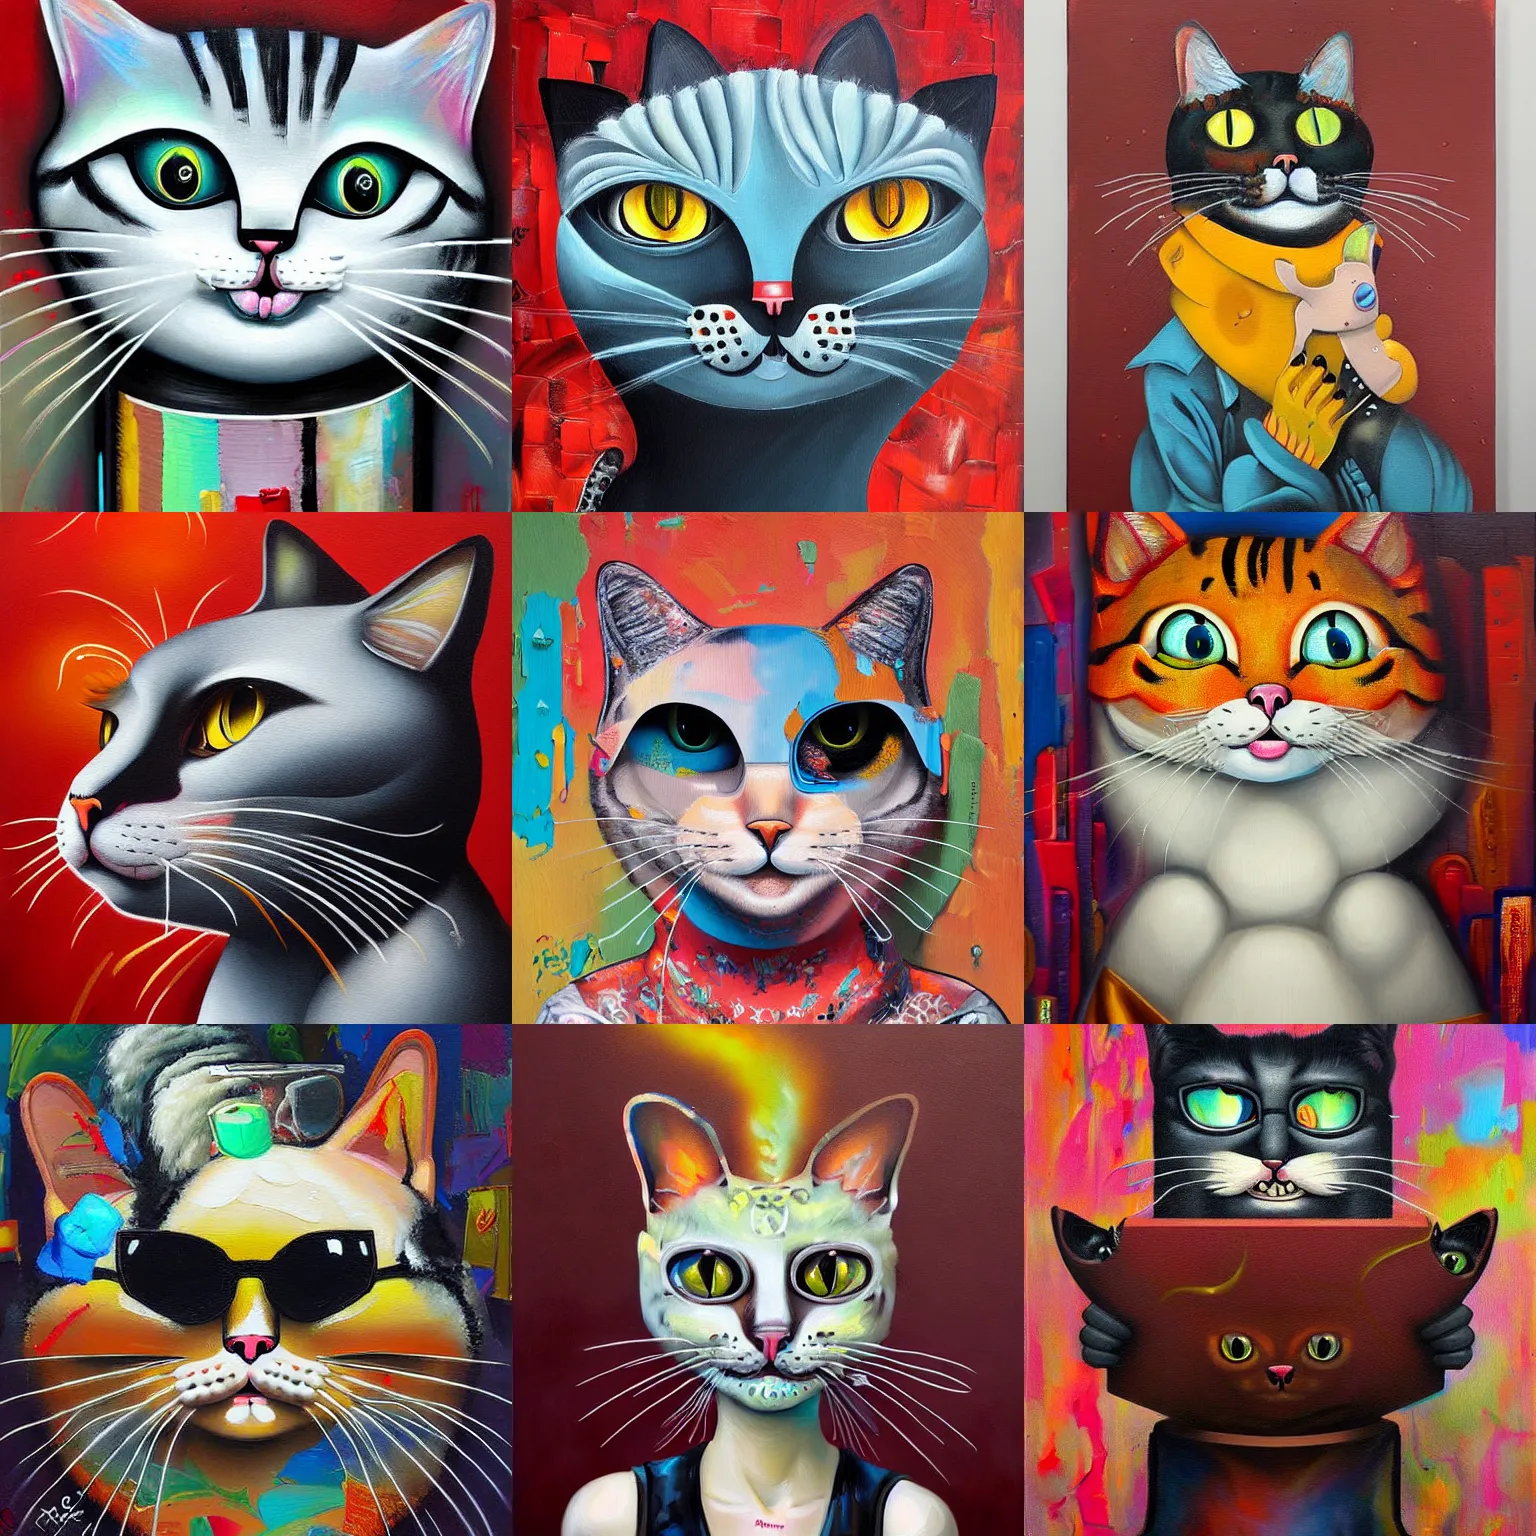 Prompt: anthropomorphic cat painting by andrei riabovitchev, tara mcpherson, david choe, decorative graffity, detailed painterly impasto brushwork